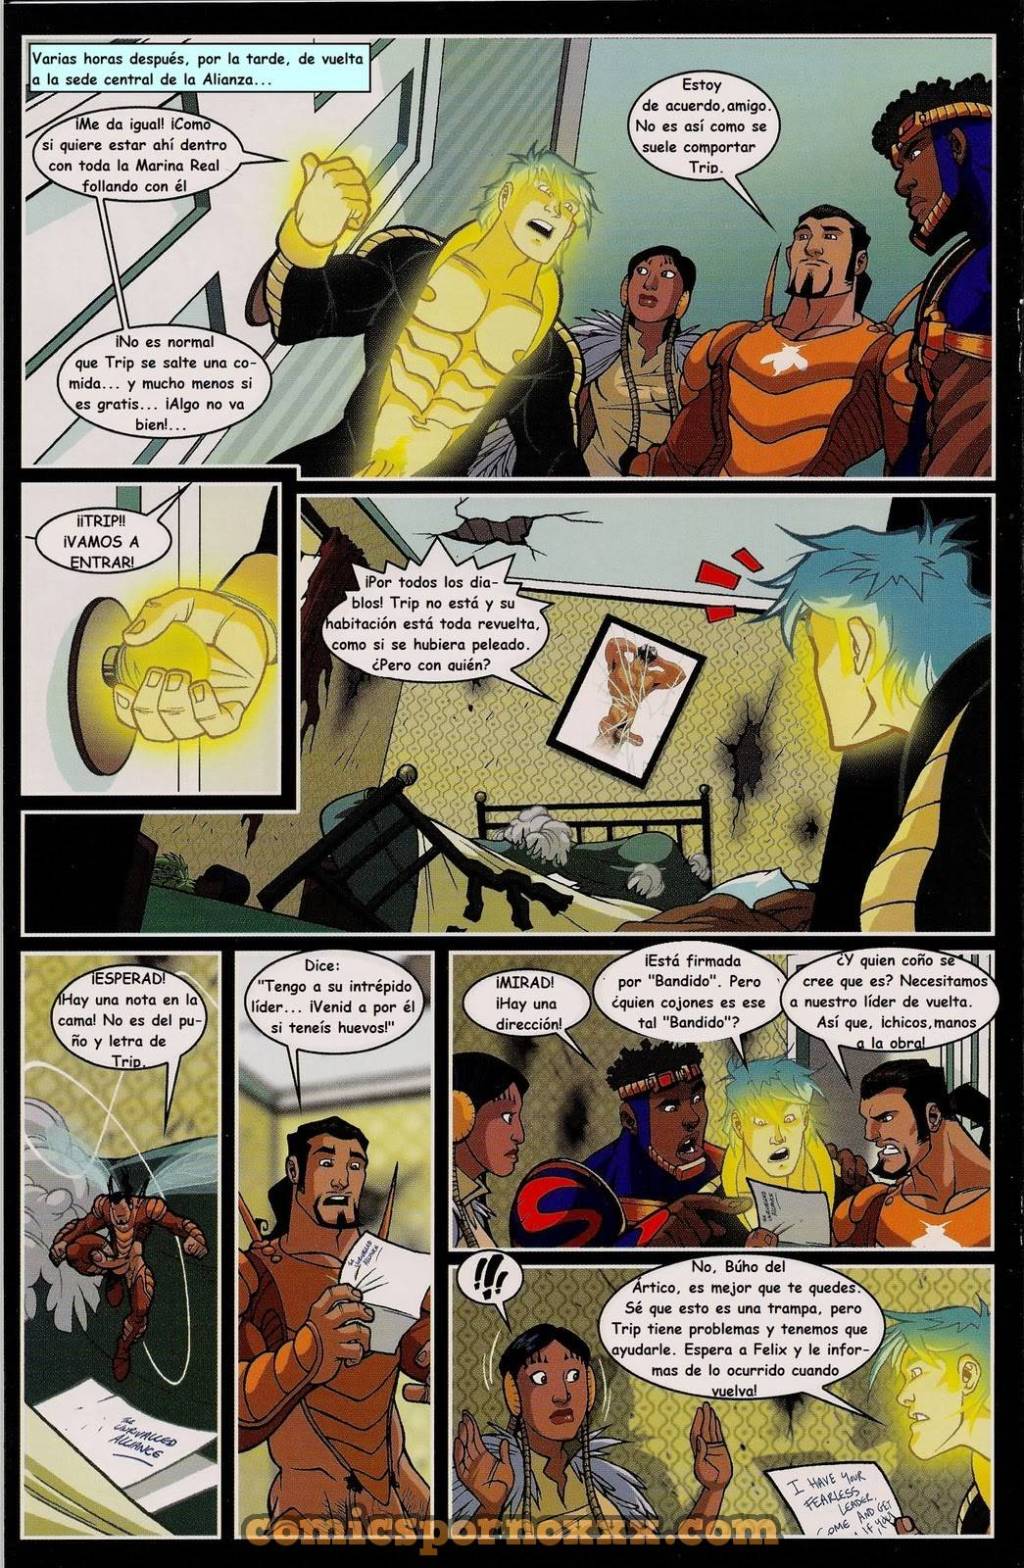 Justicia al Desnudo #2 (Comics de Superhéroes muy Gay) - 7 - Comics Porno - Hentai Manga - Cartoon XXX